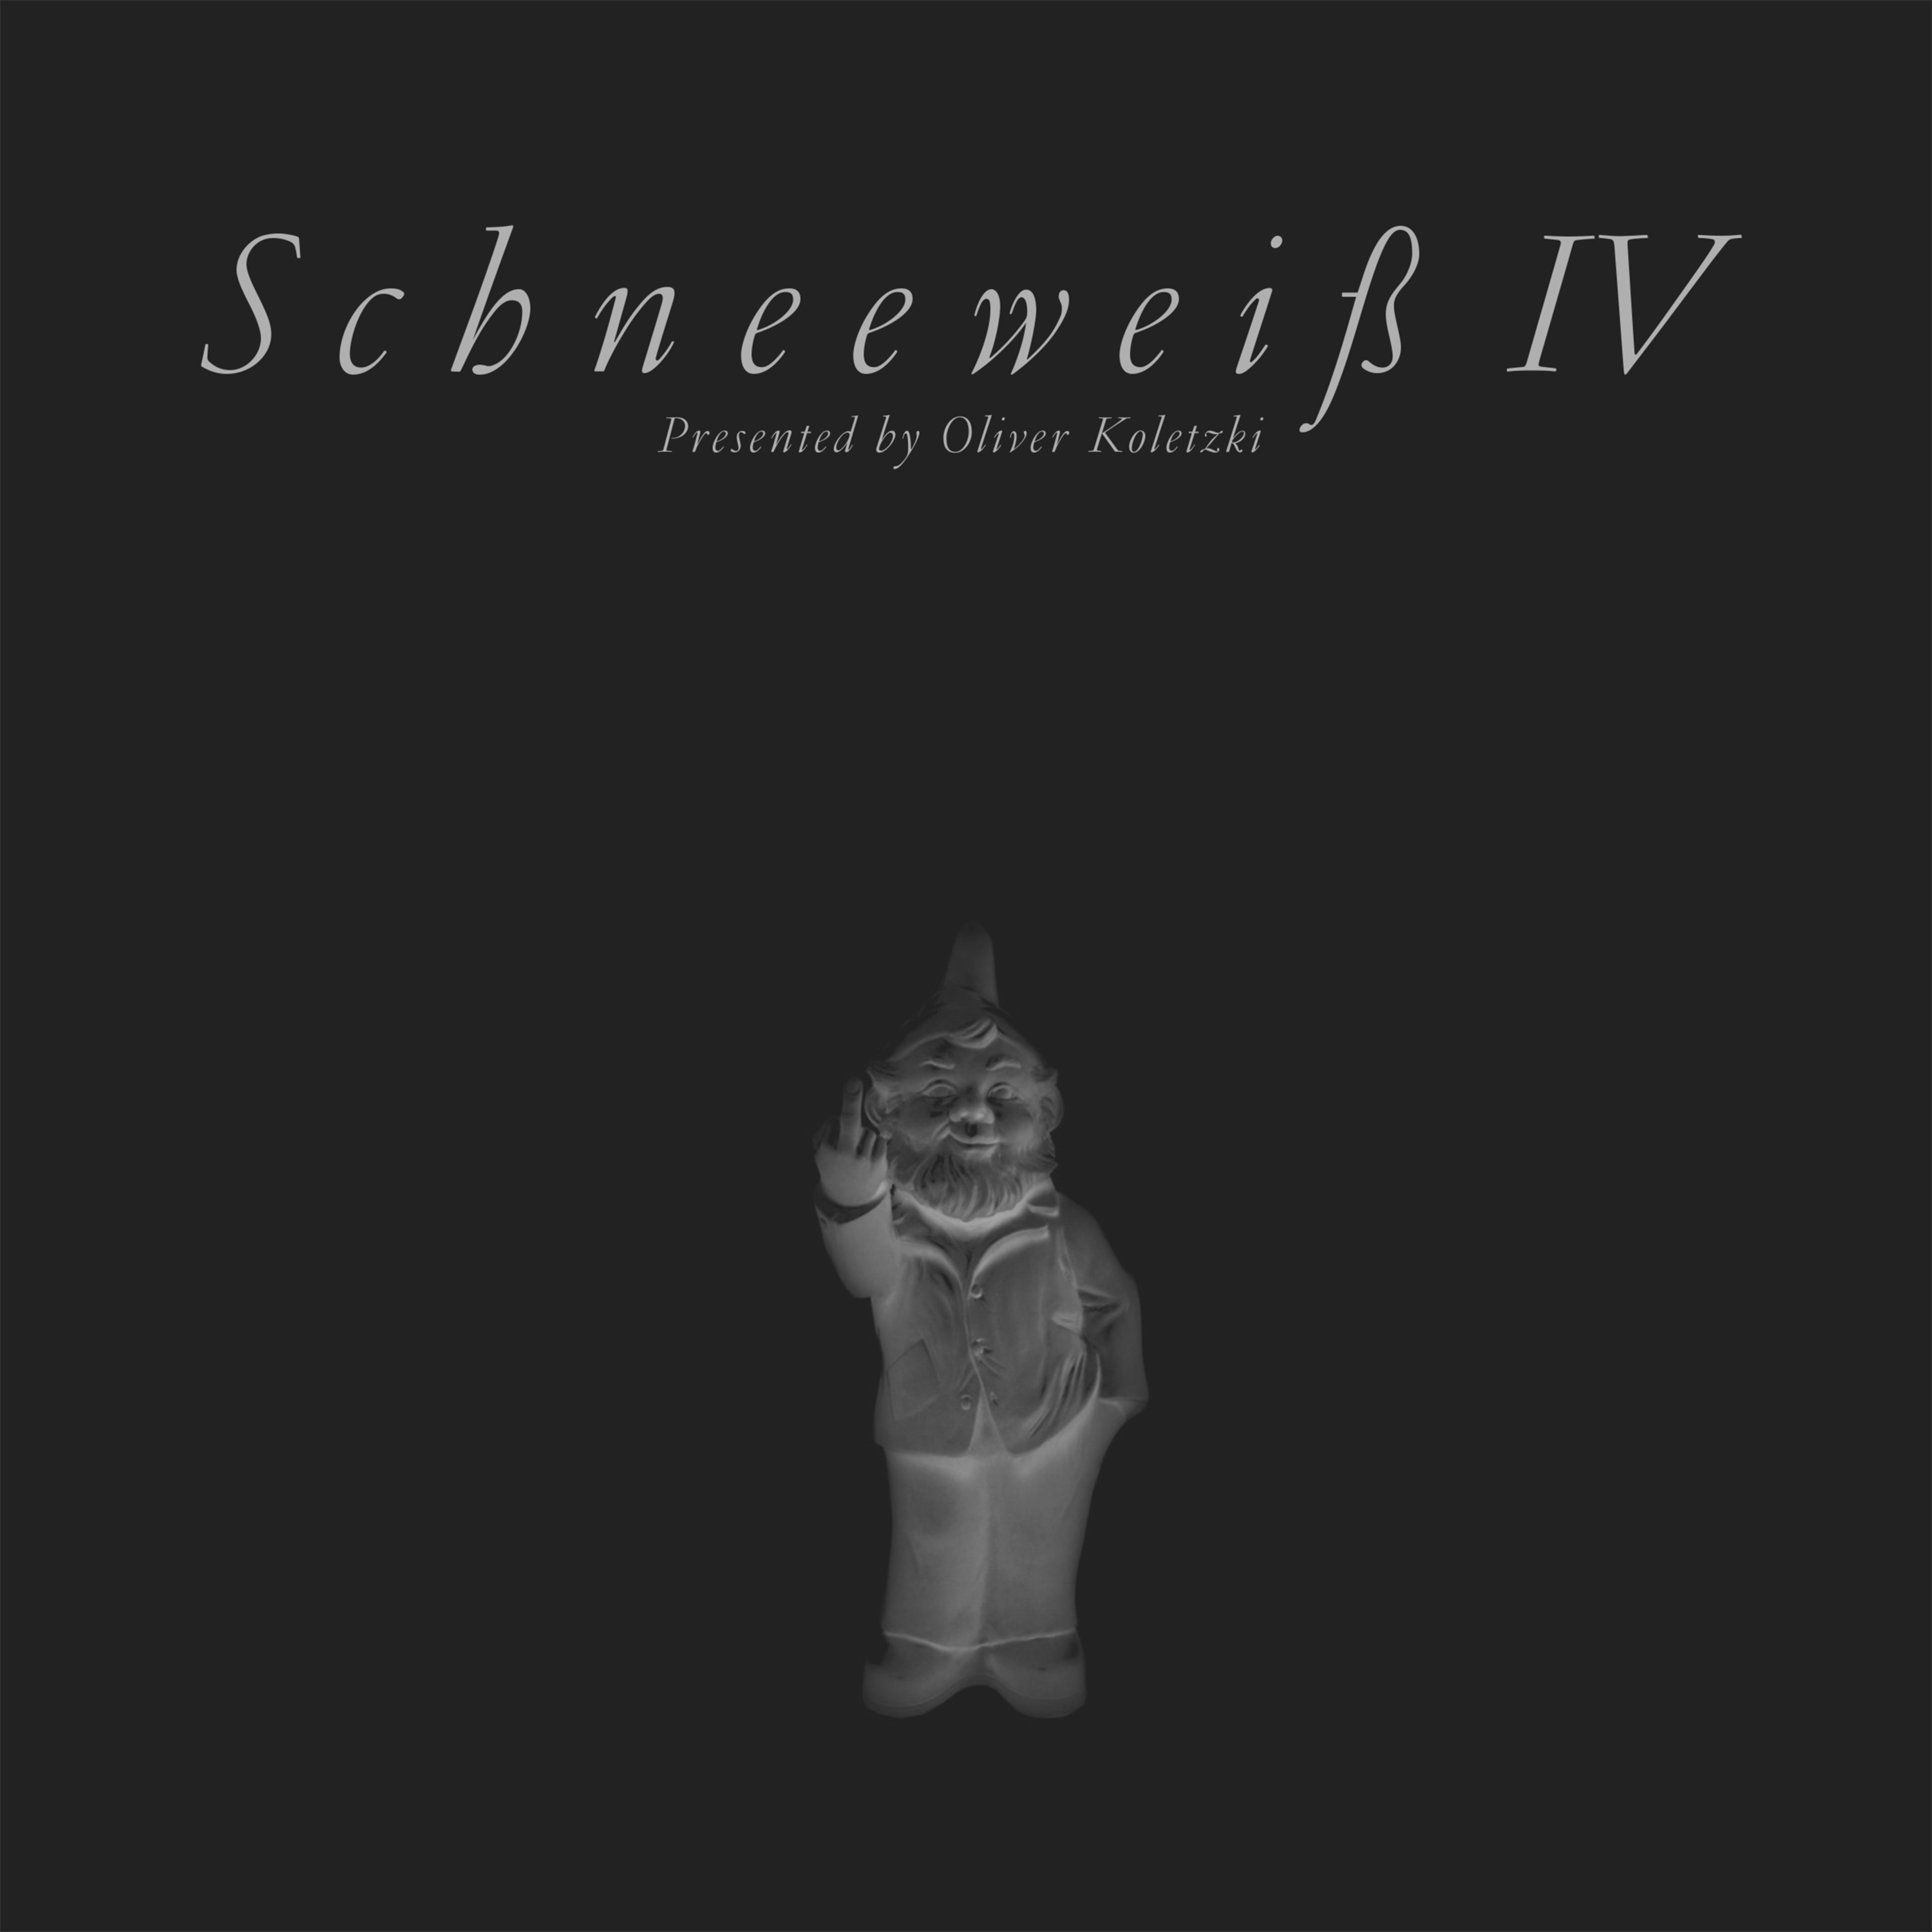 Schneeweiss IV Presented by Oliver Koletzki